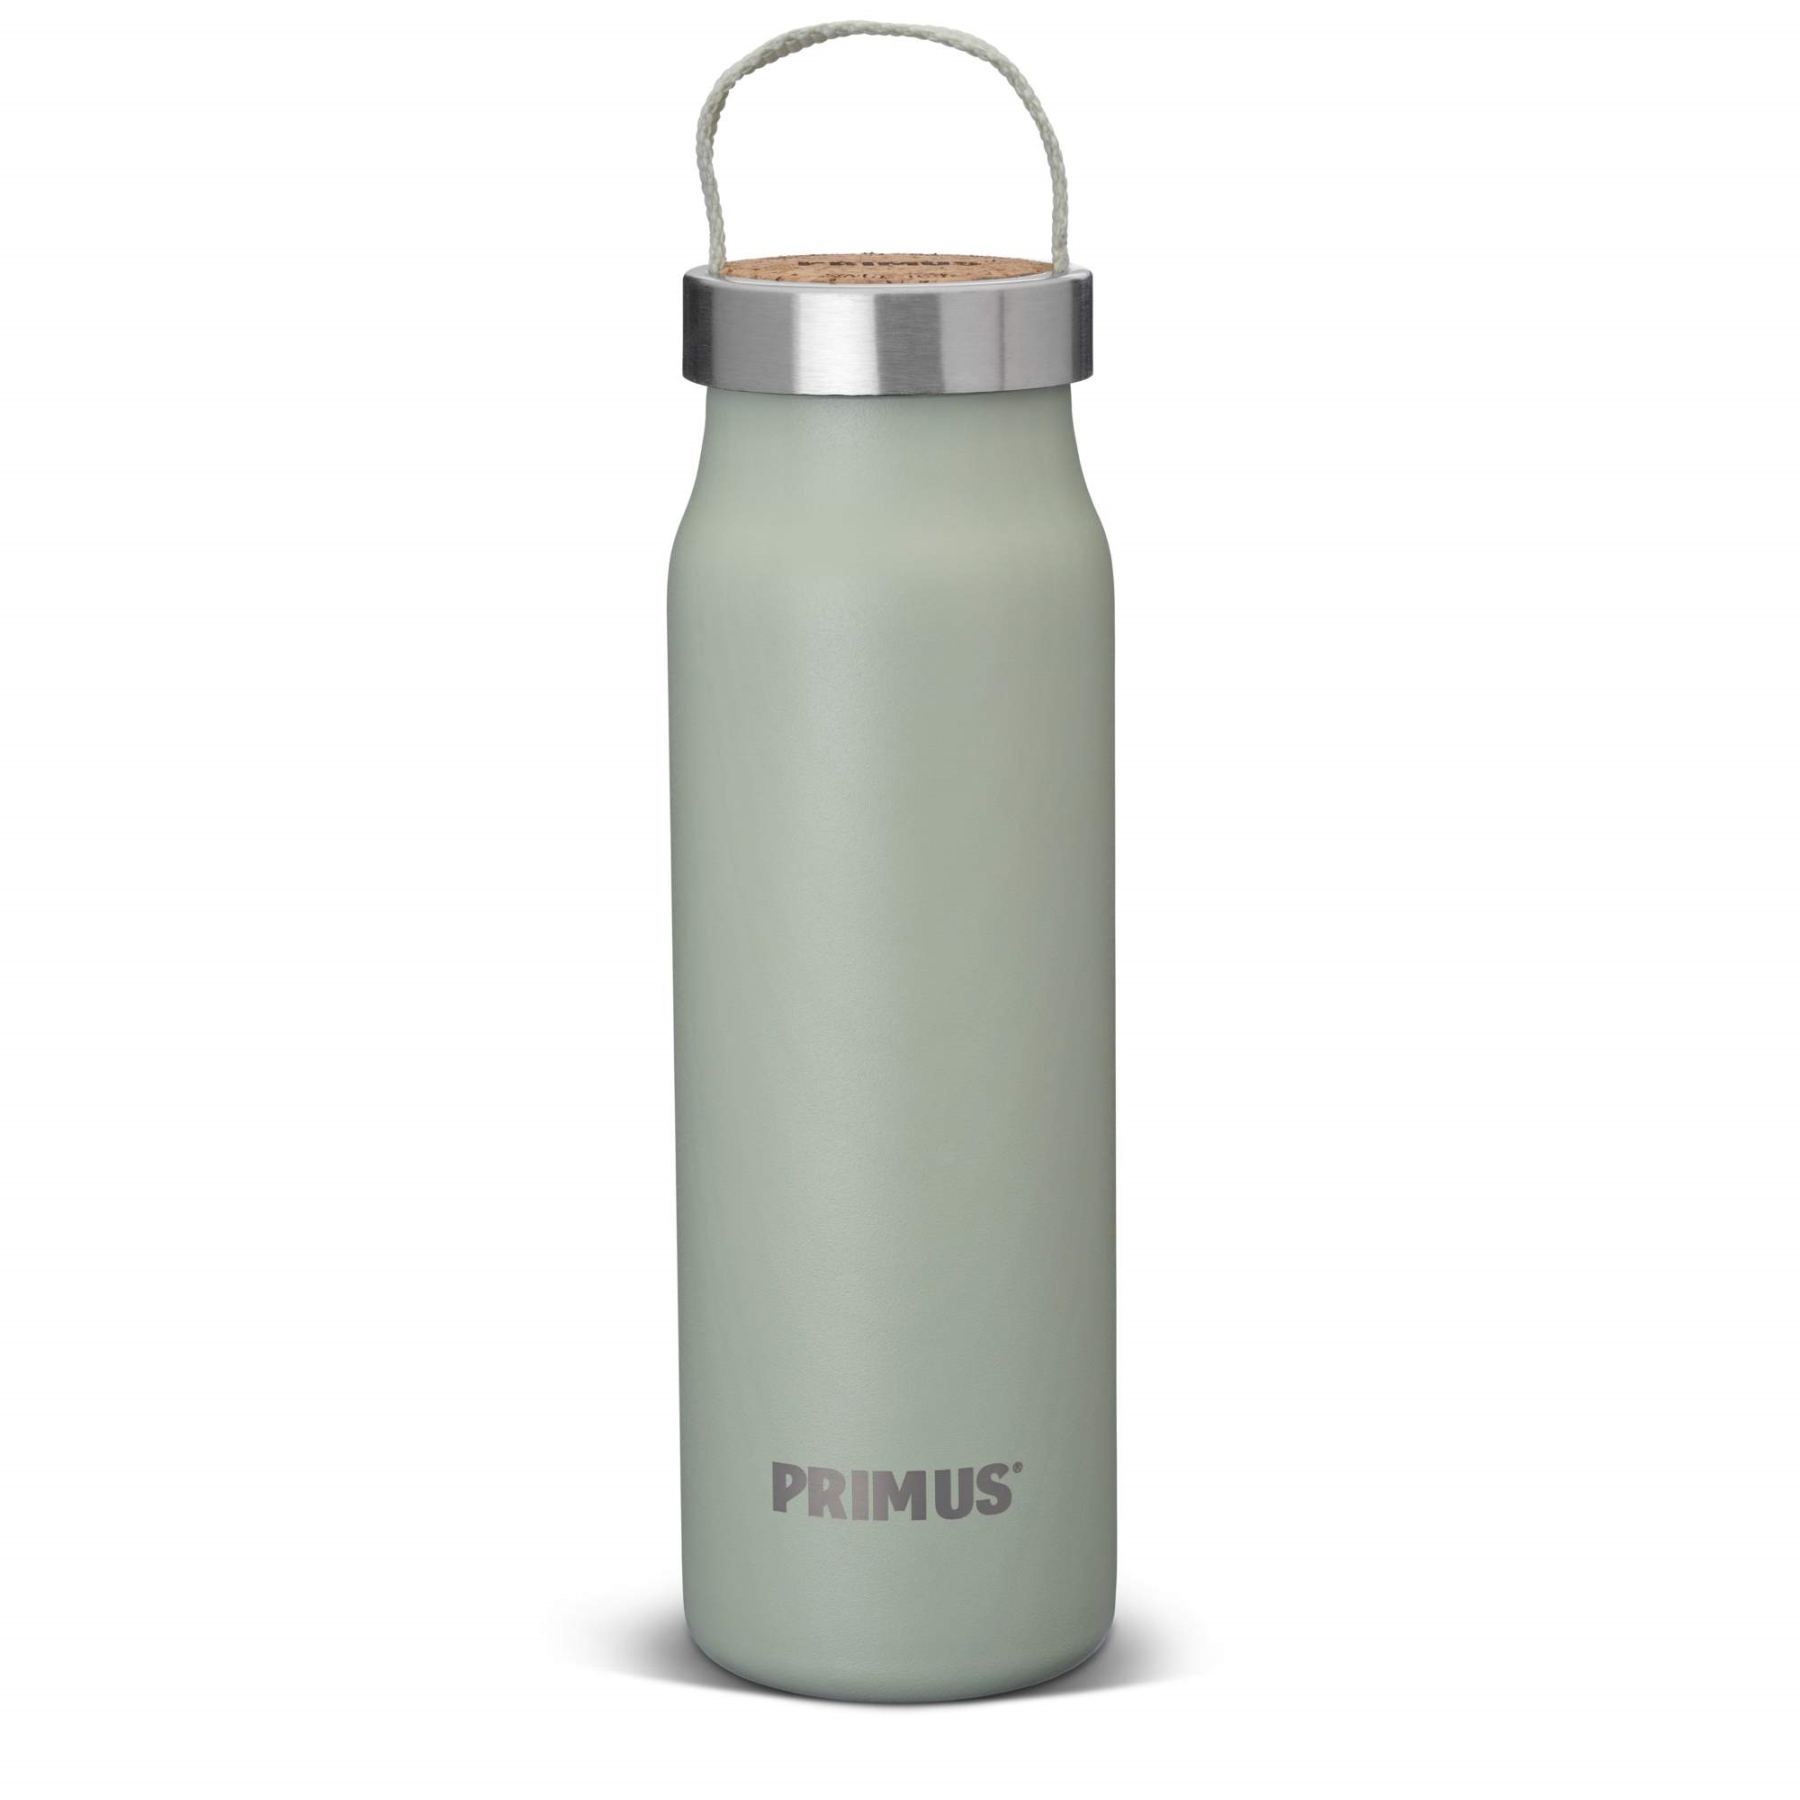 Productfoto van Primus Klunken Vacuum Bottle 0.5 L - mint